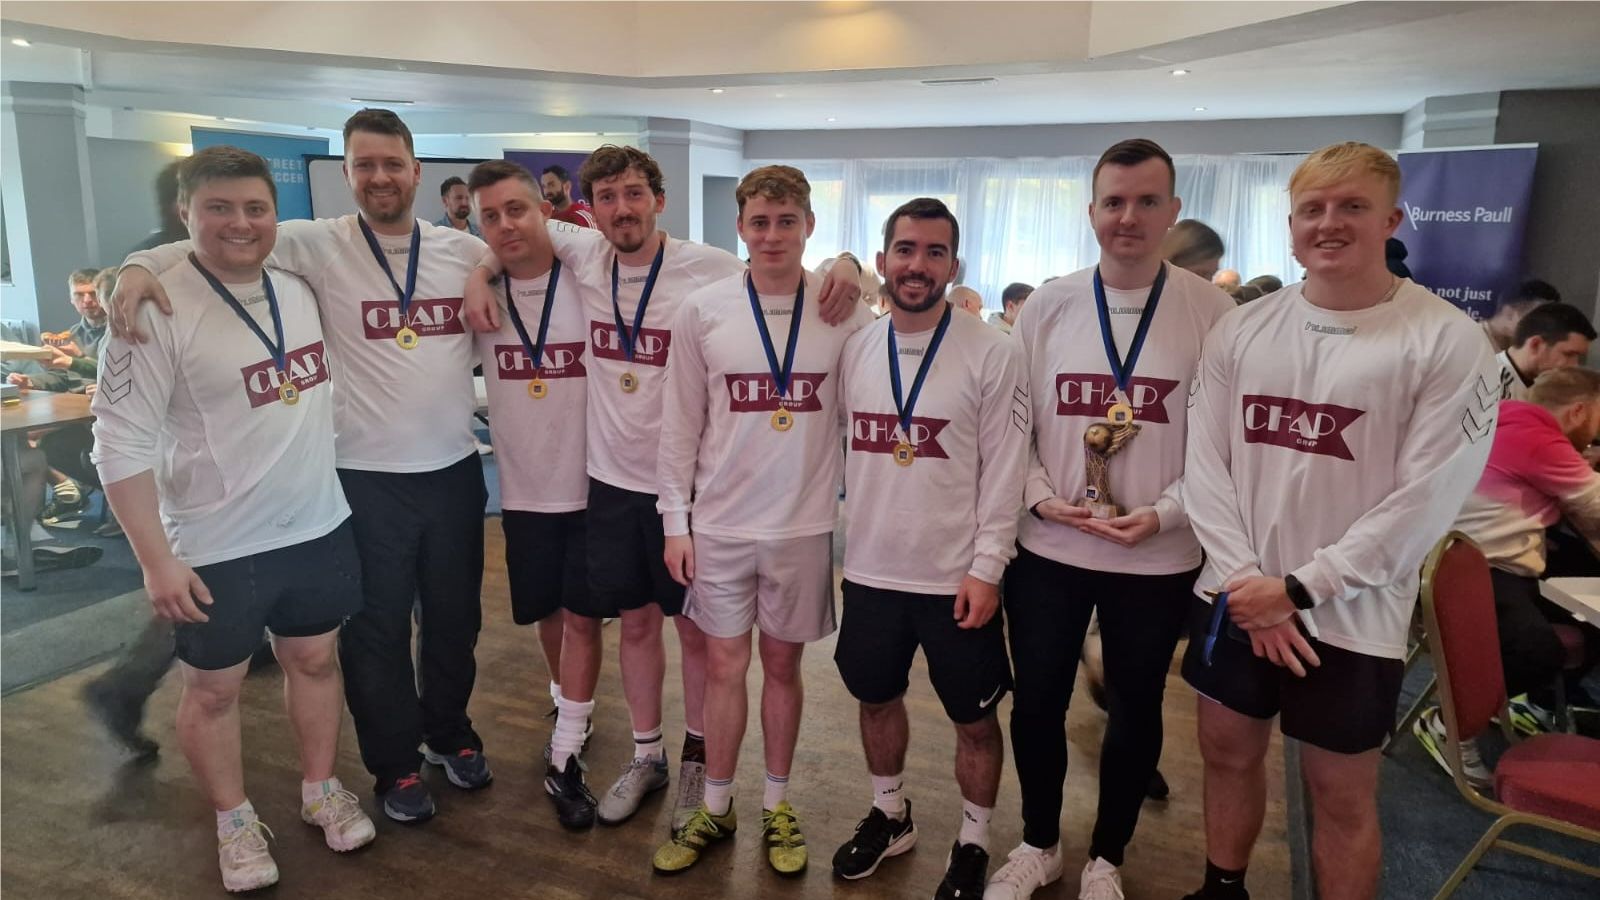 CHAP Group triumphs in Aberdeen football tournament